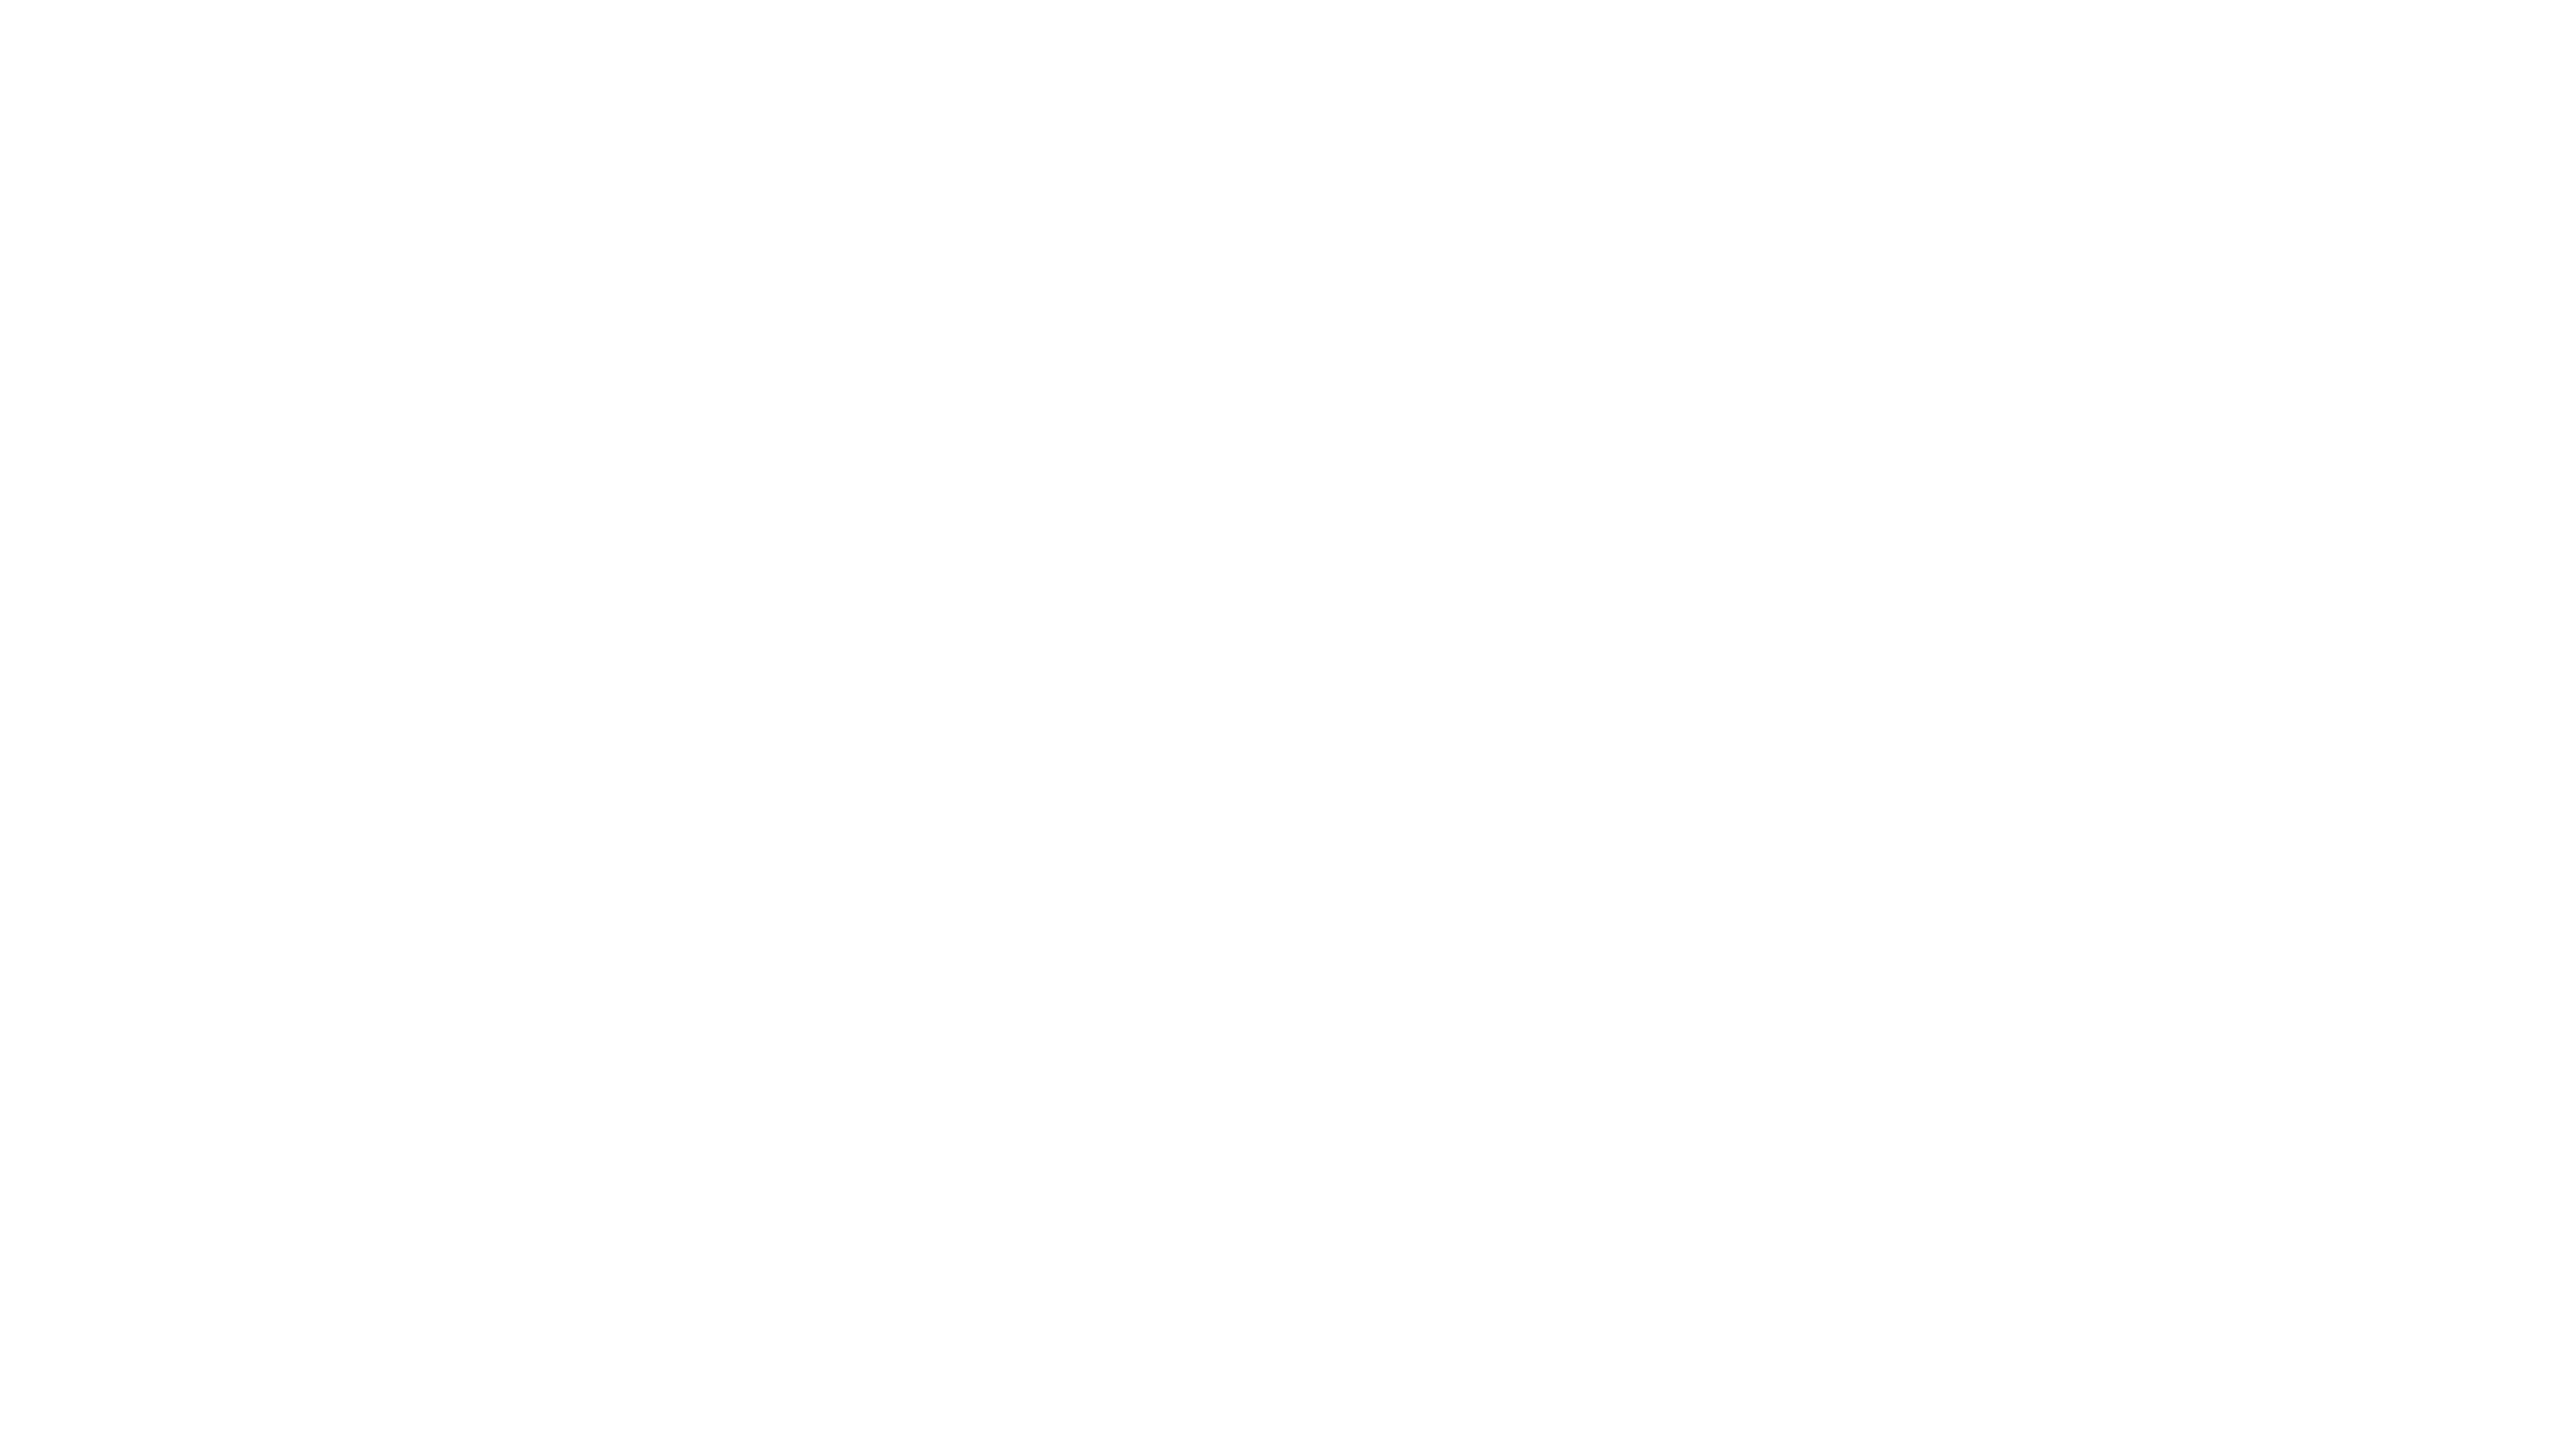 The Destiny 2 Lightfall logo